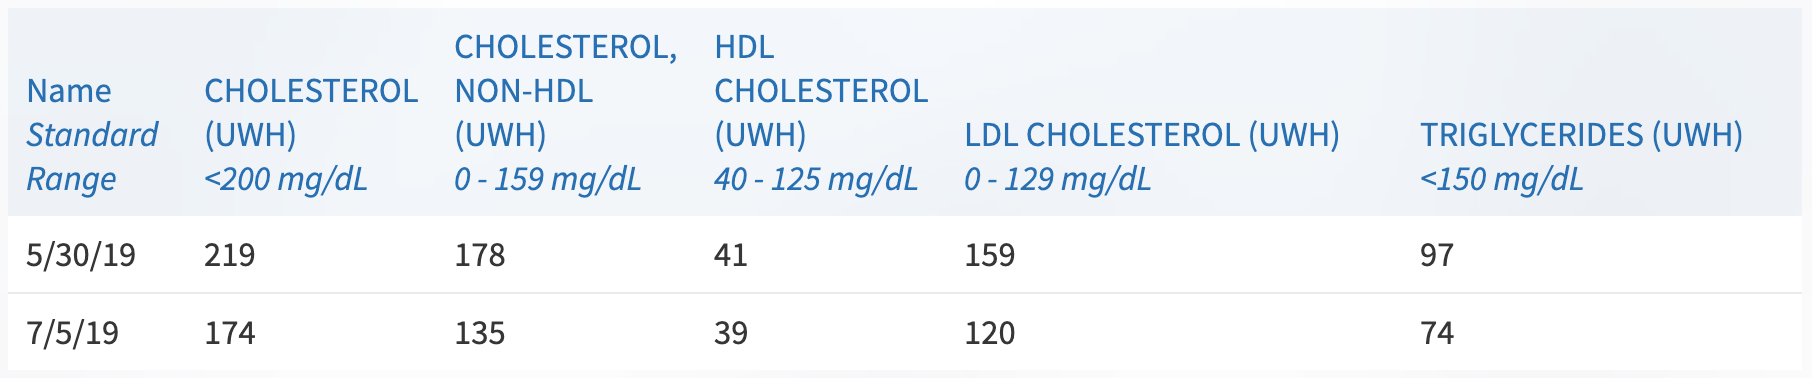 lipid panel results 2019-07-05